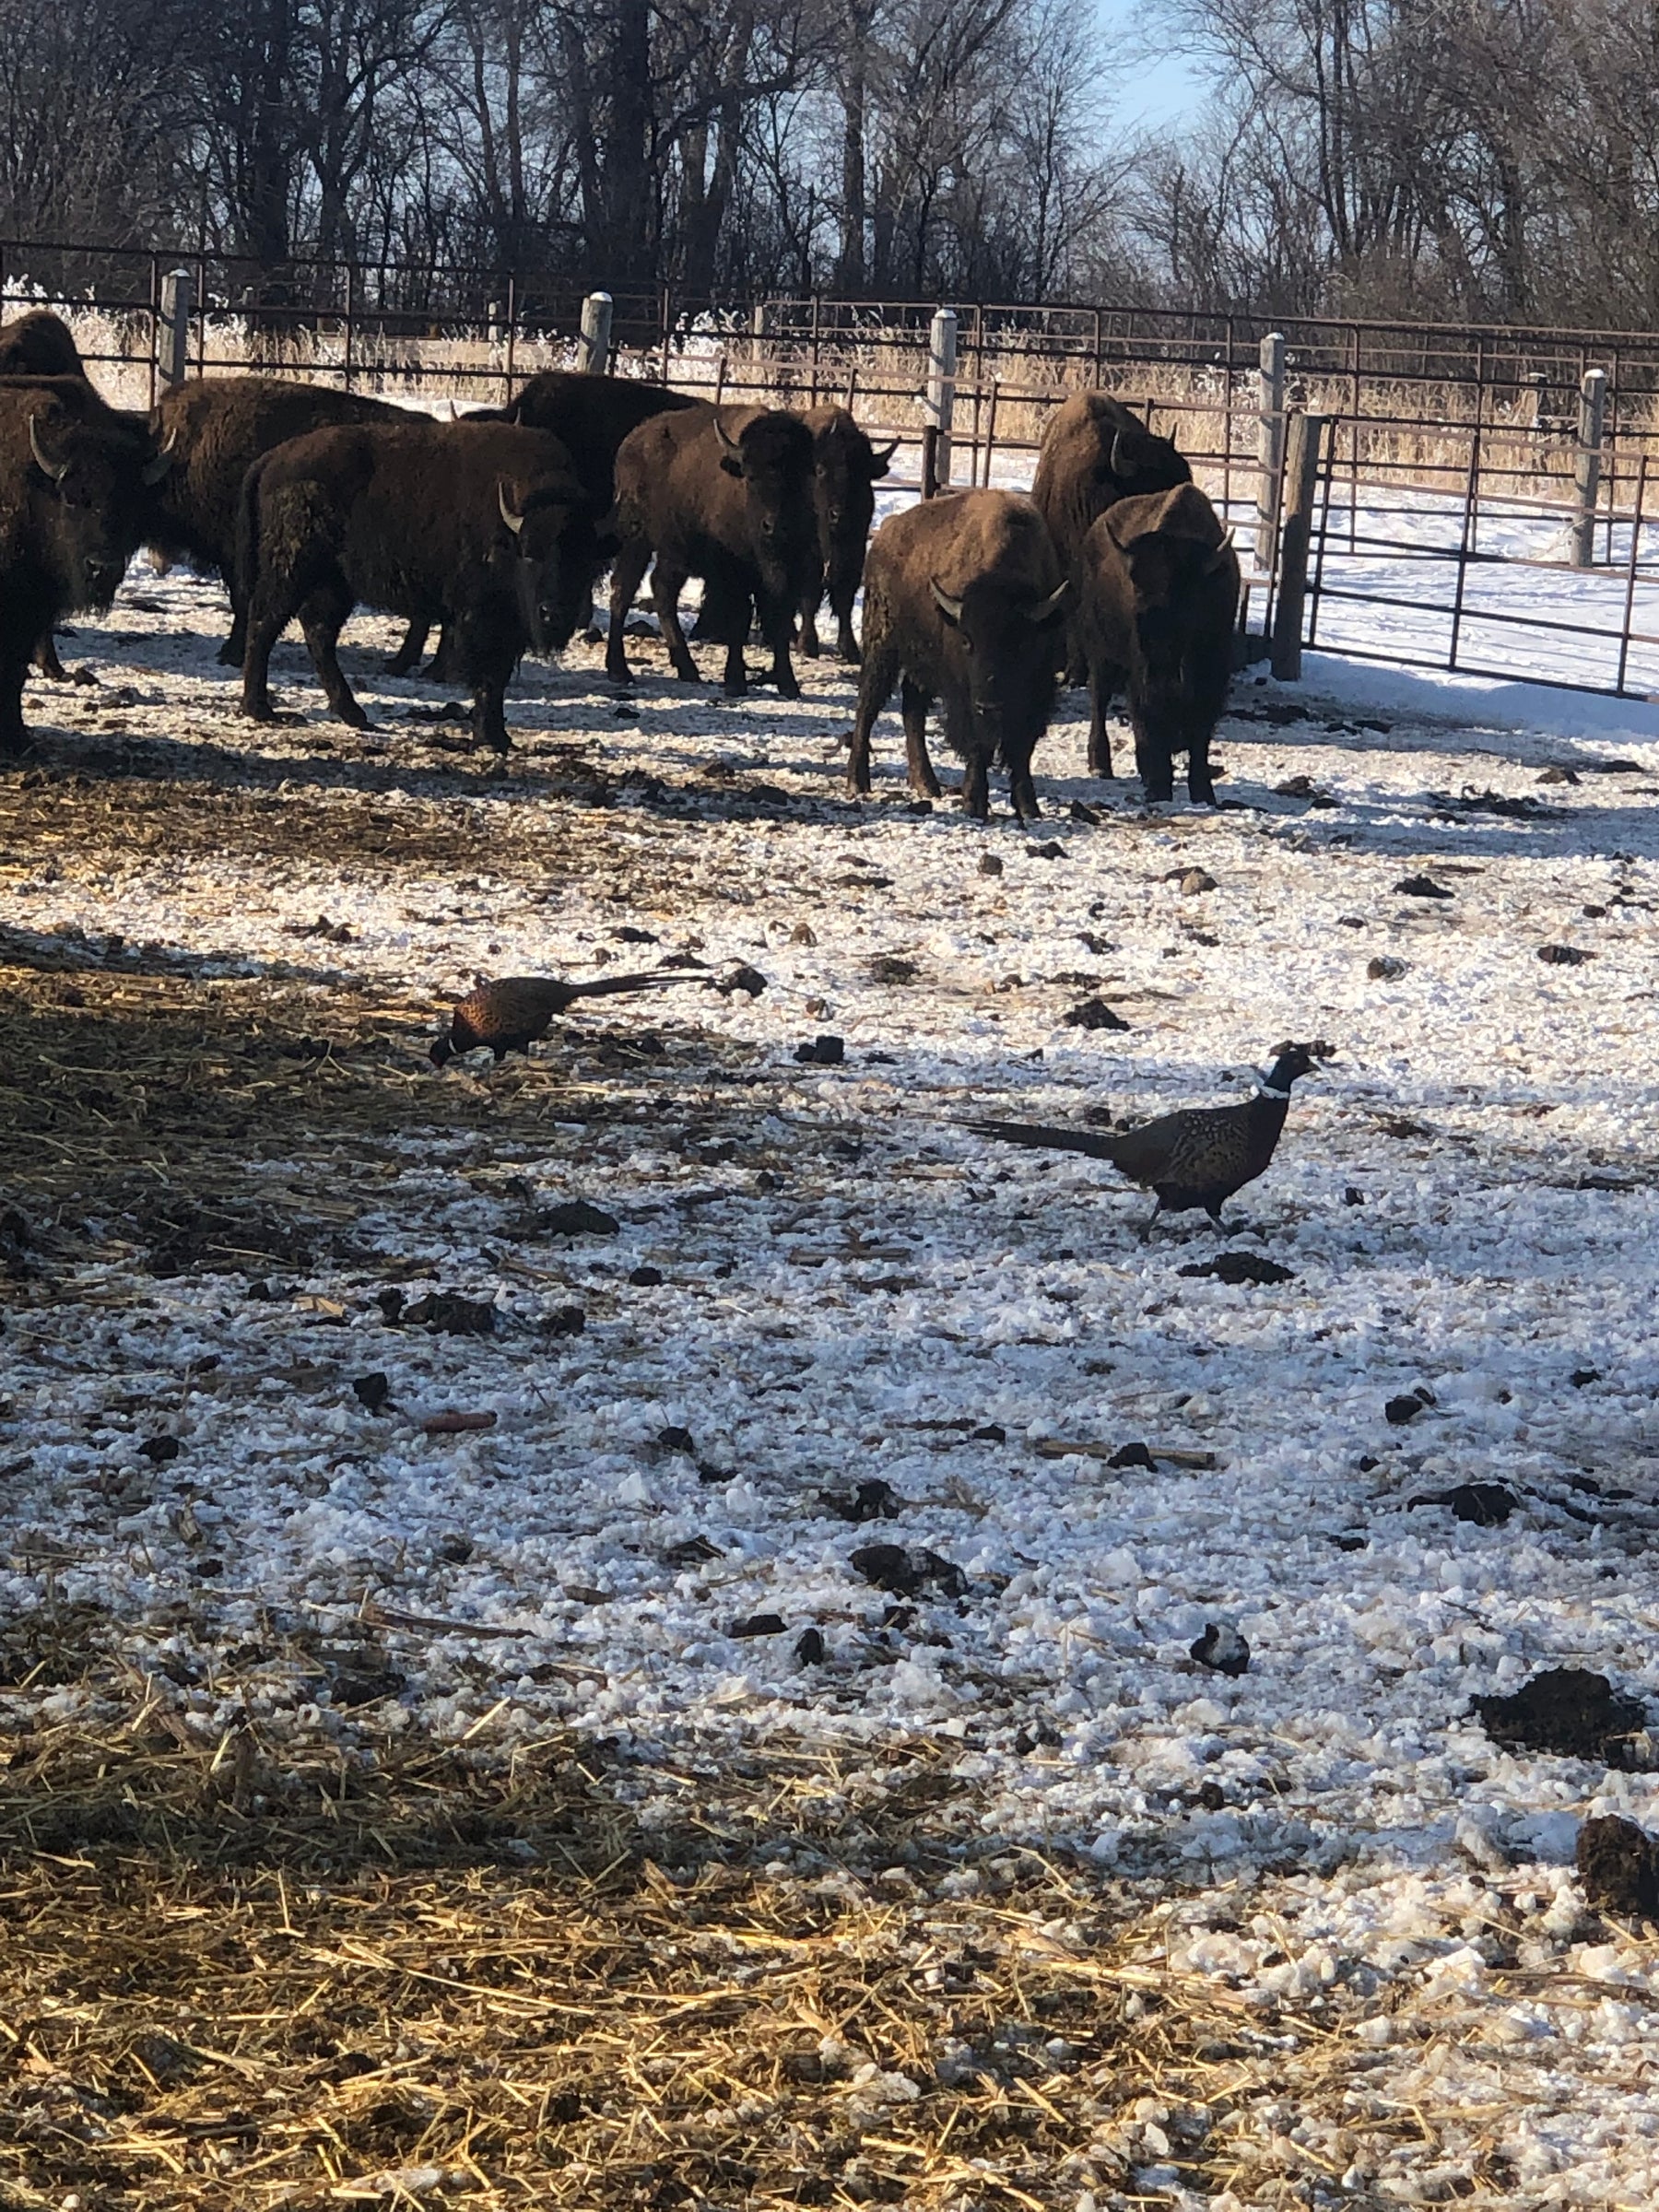 South Dakota bison, Pheasants and Friends